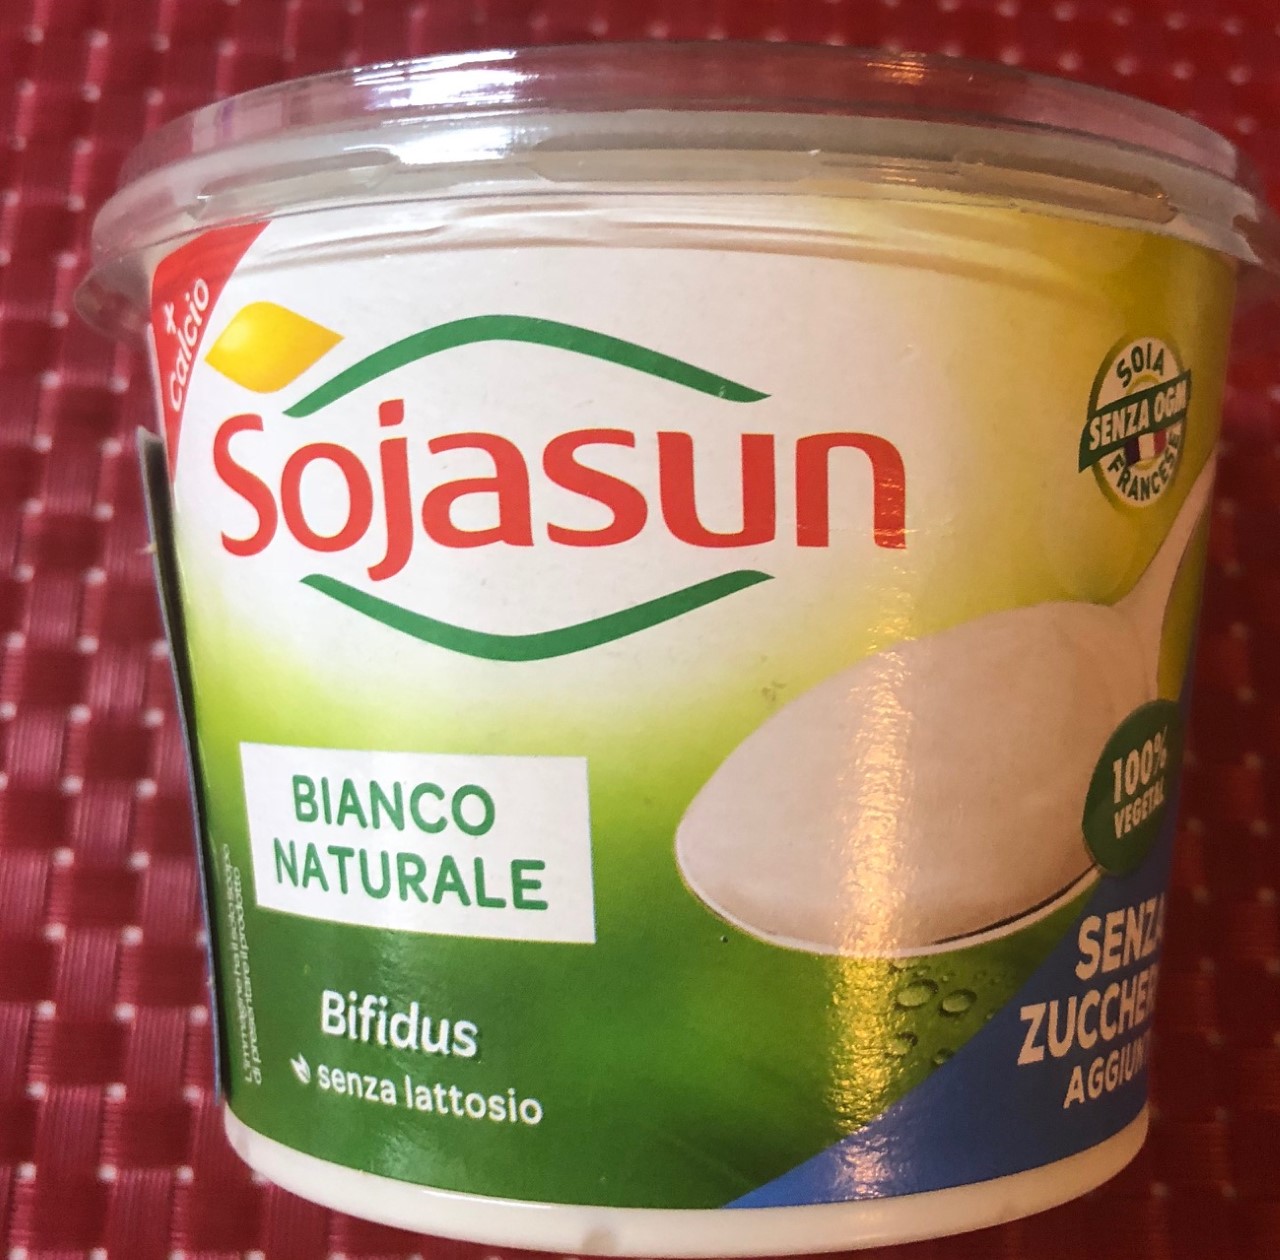 Yogurt Sojasun - lattosio 0% Image